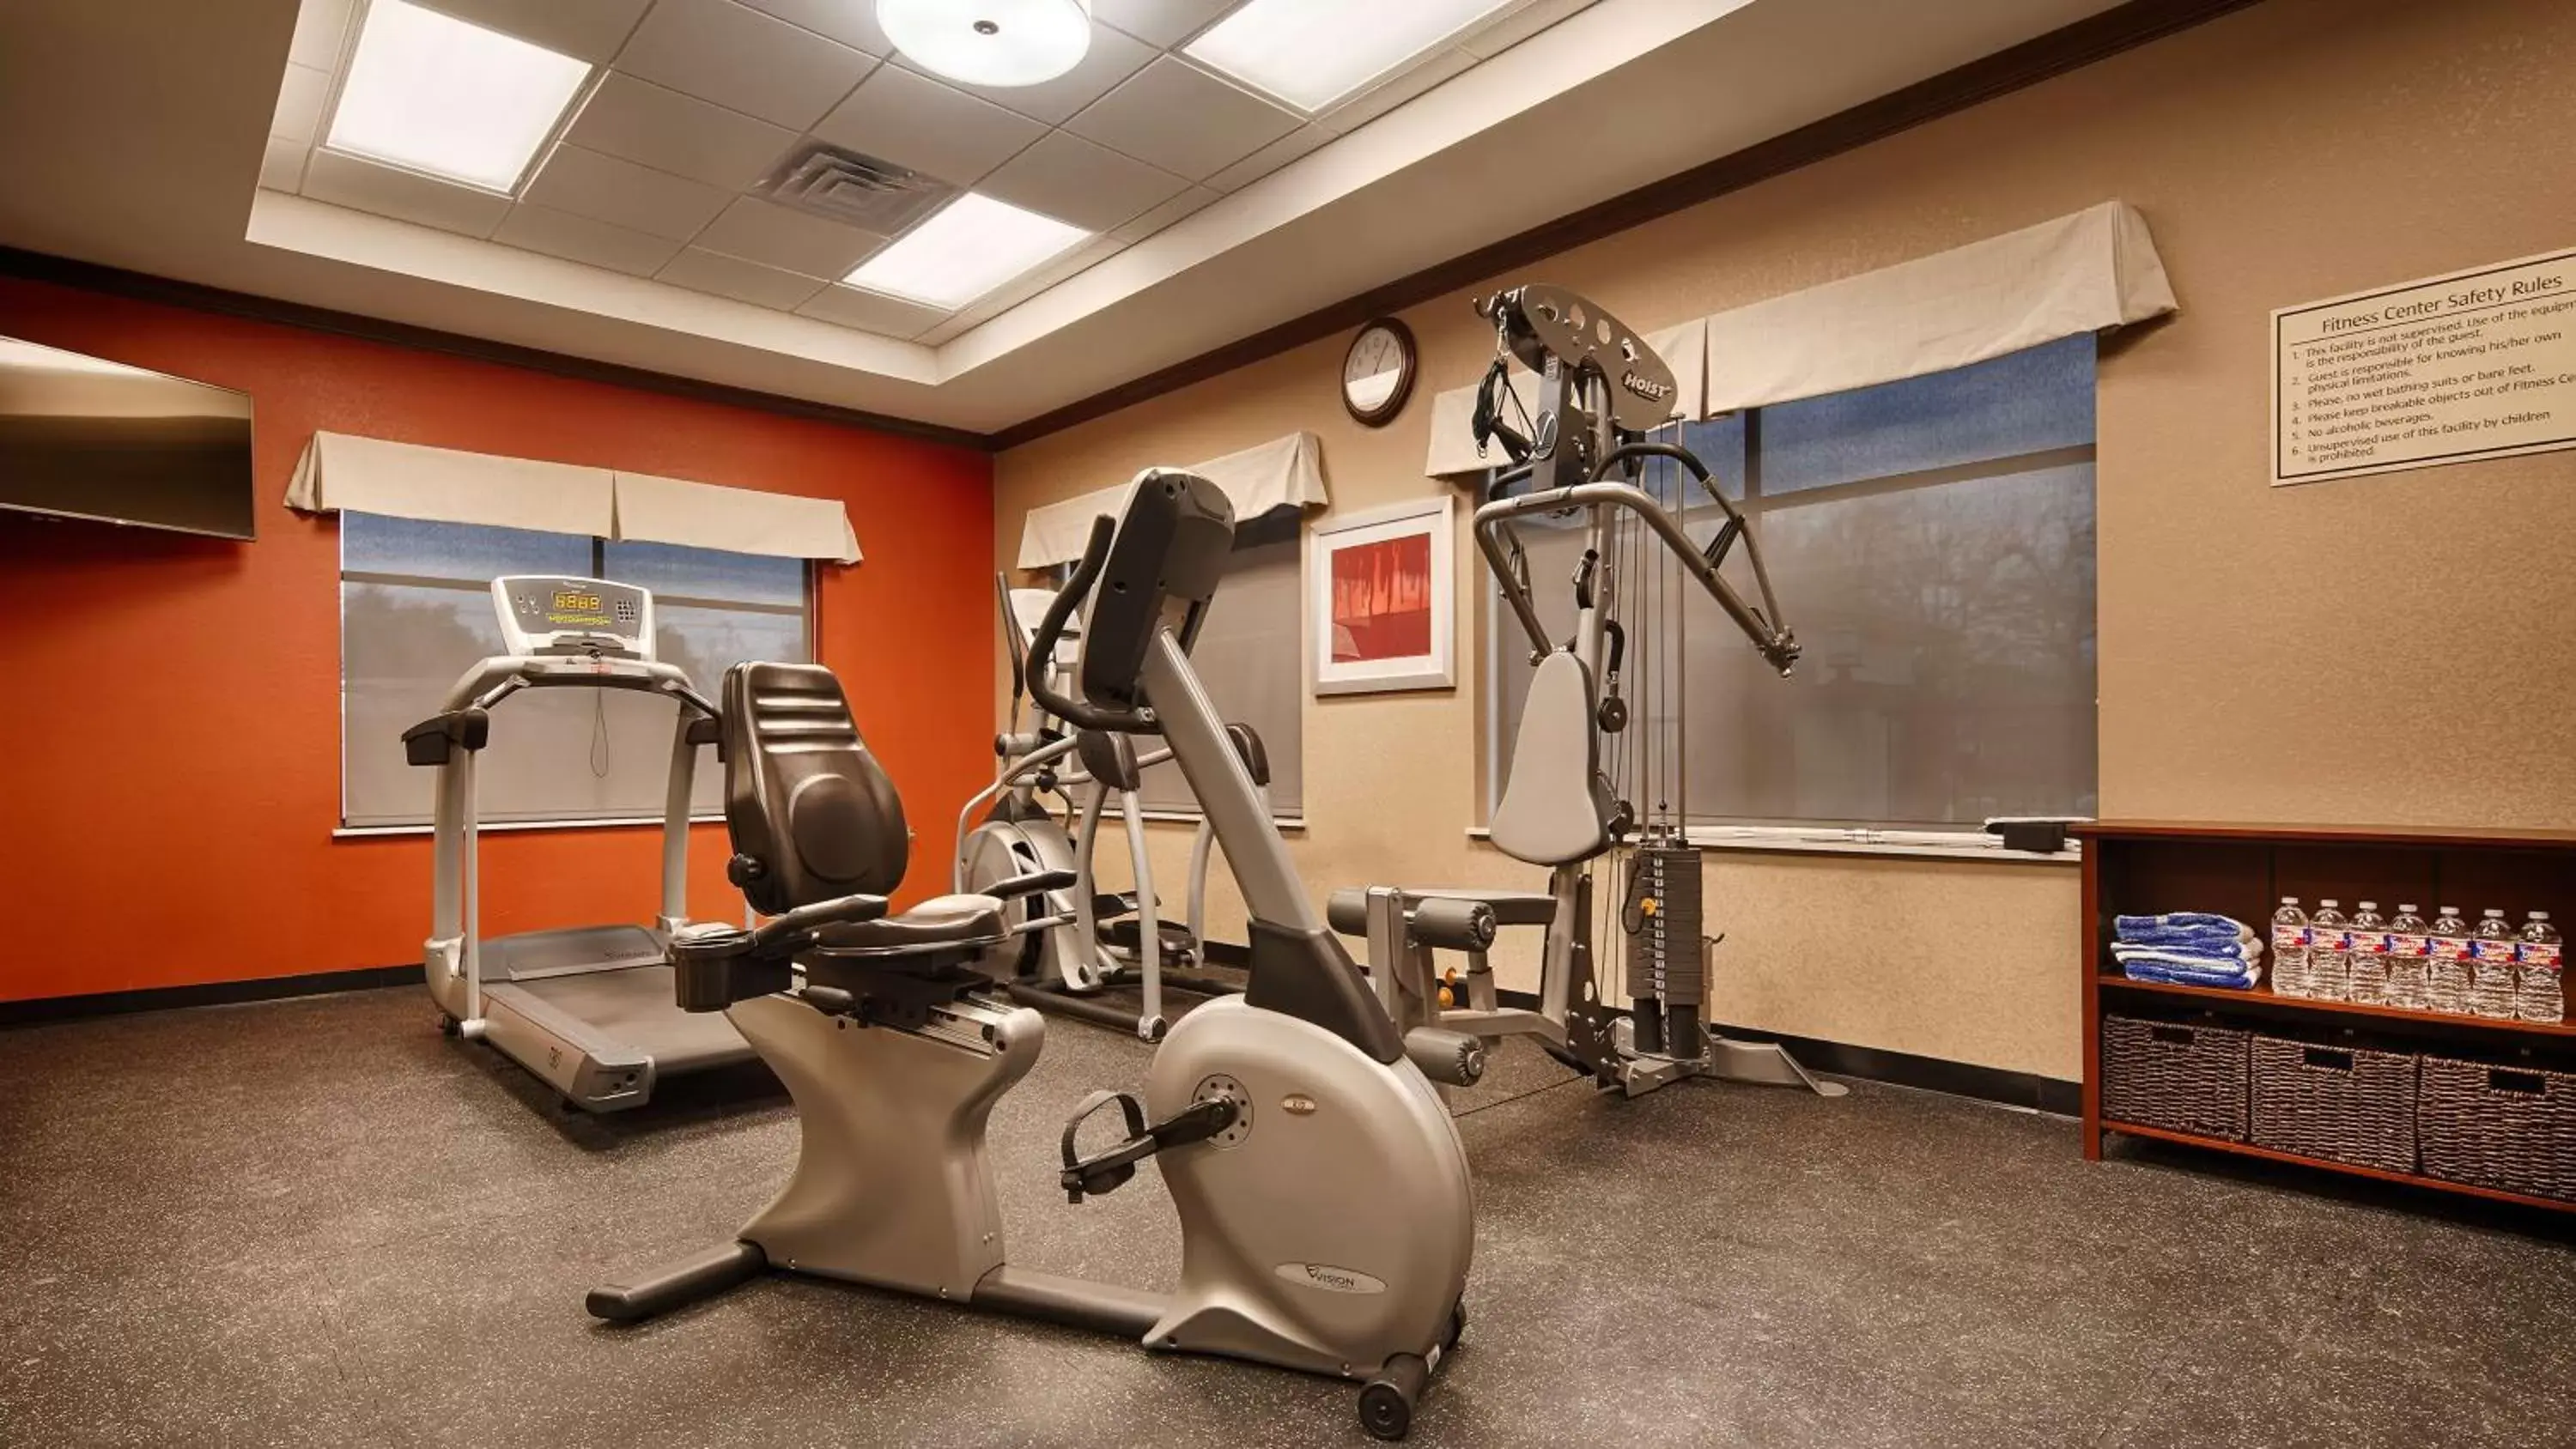 Fitness centre/facilities, Fitness Center/Facilities in Best Western Plus Flatonia Inn